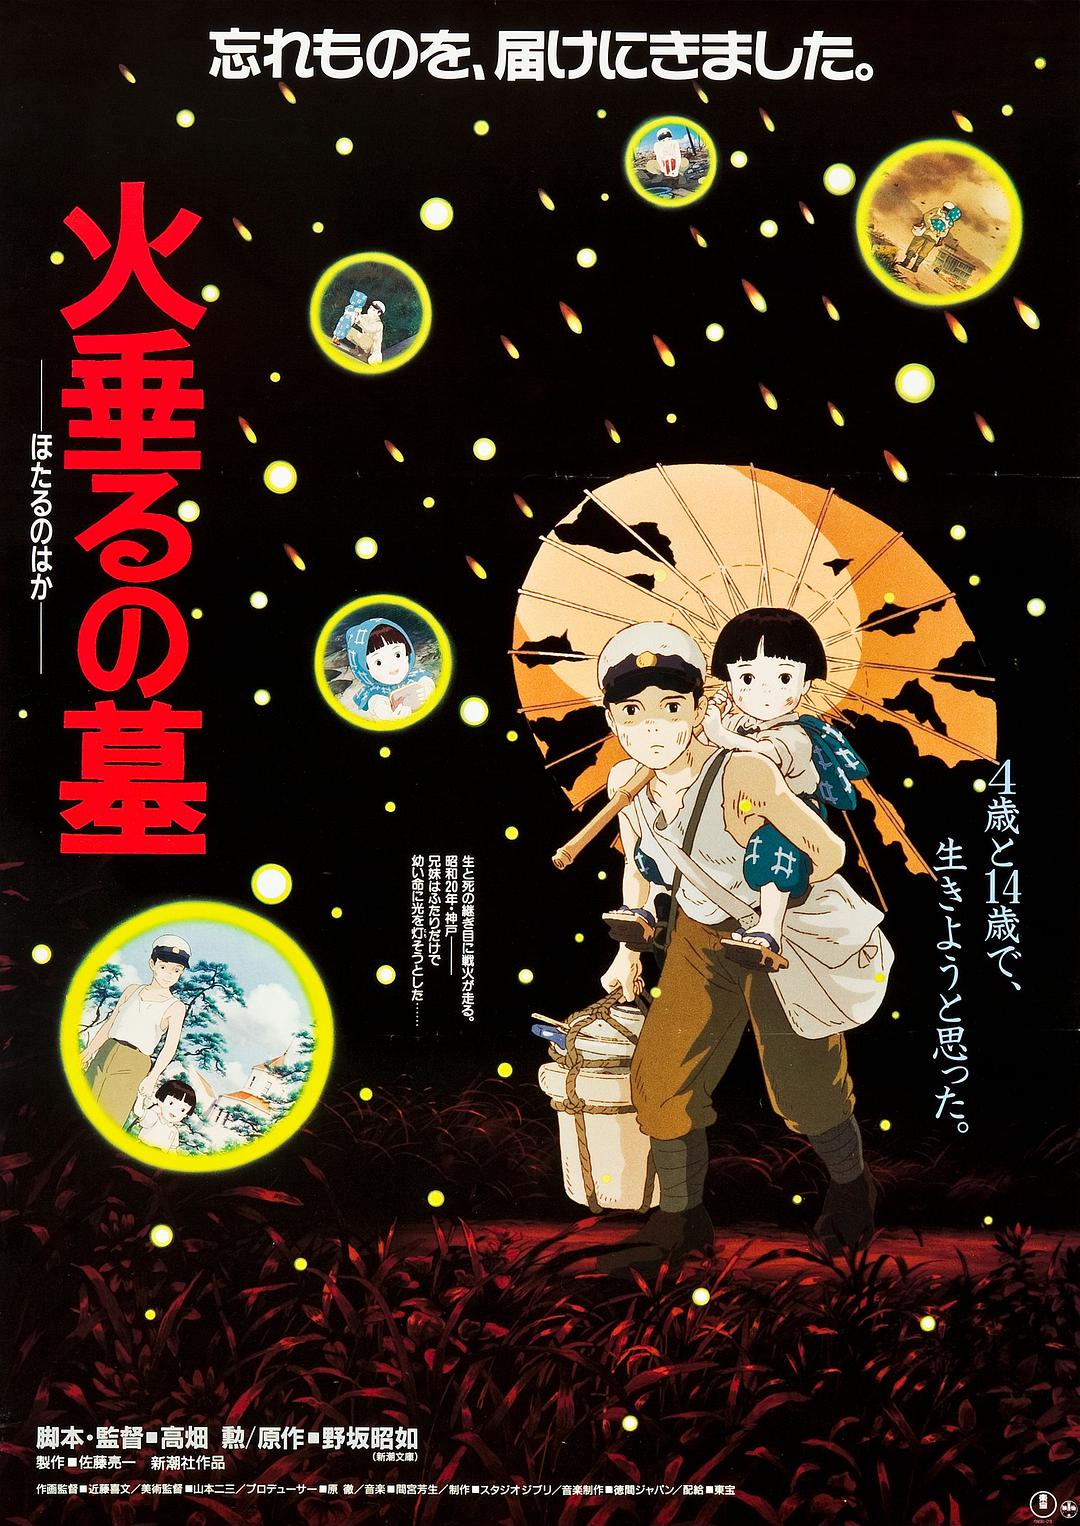 萤火虫之墓 Grave.of.the.Fireflies.1988.JAPANESE.1080p.BluRay.REMUX.AVC.DTS-HD.MA.2.0-FGT 23.06GB ...